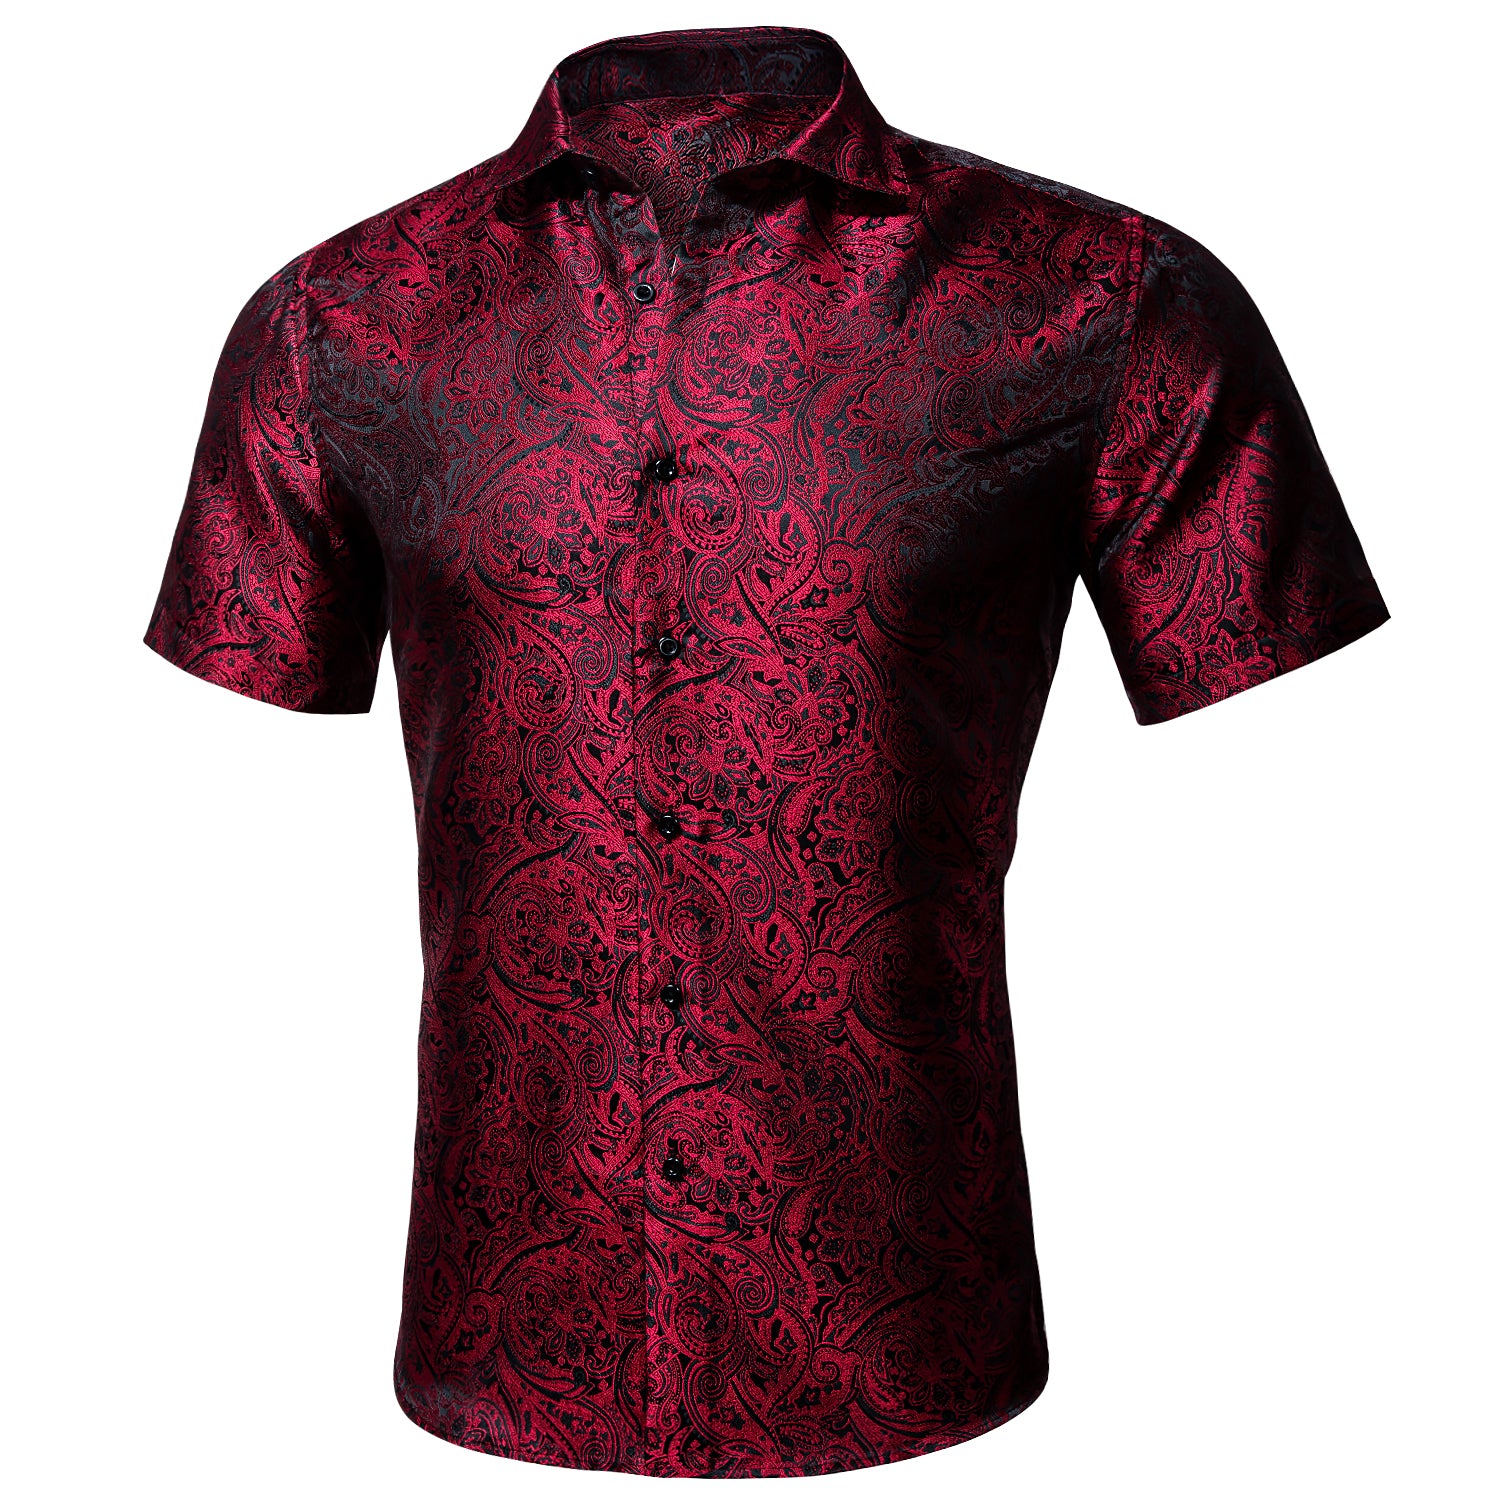 Barry.wang Men's Shirt Red Black Paisley Silk Short Sleeve Shirt